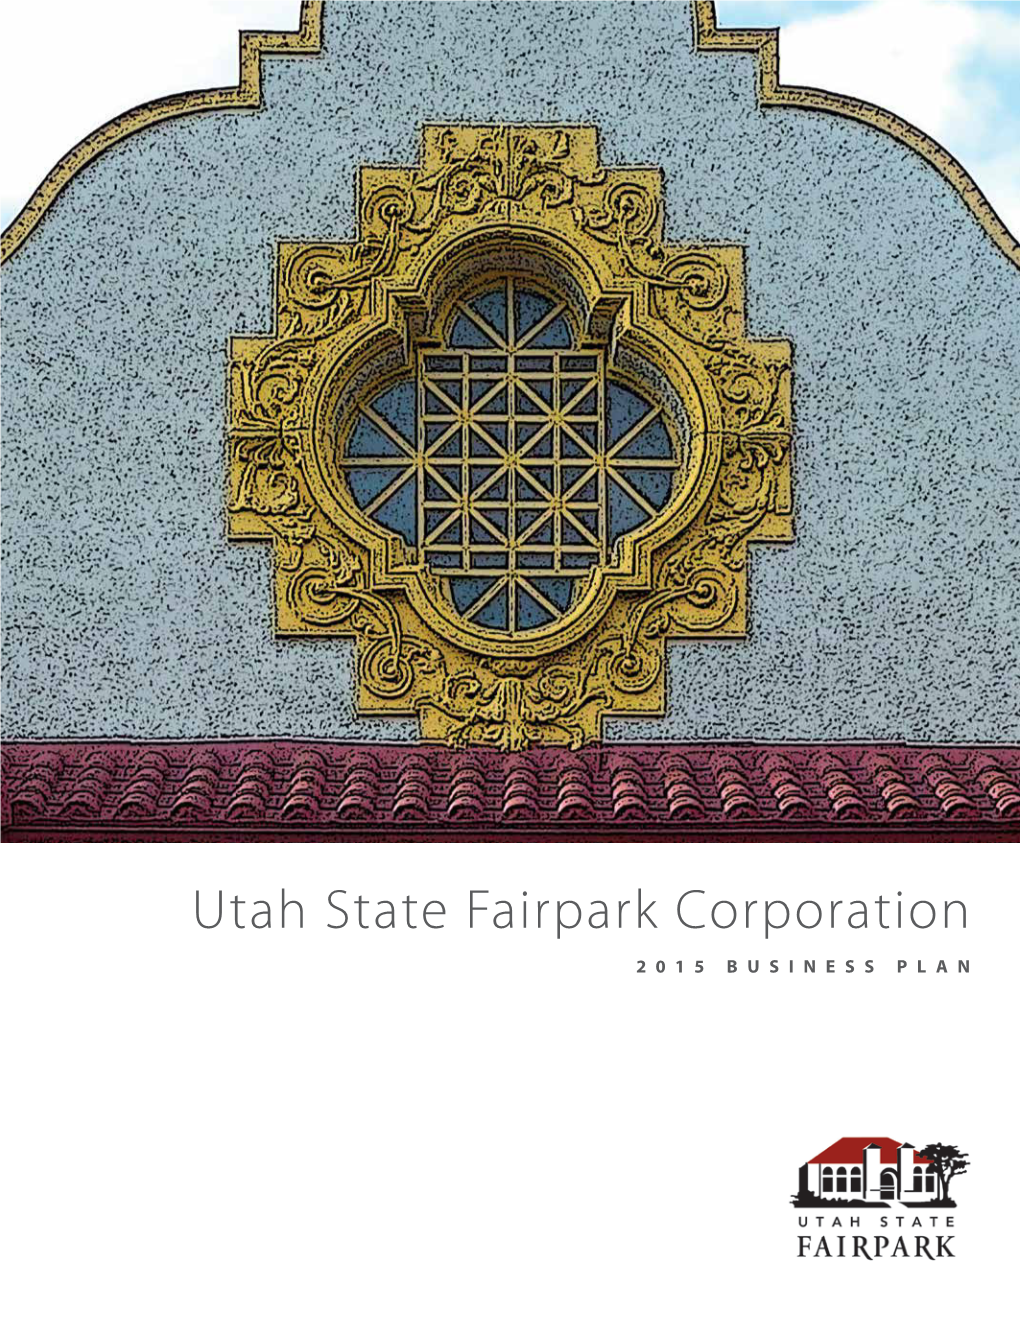 Utah State Fairpark Corporation